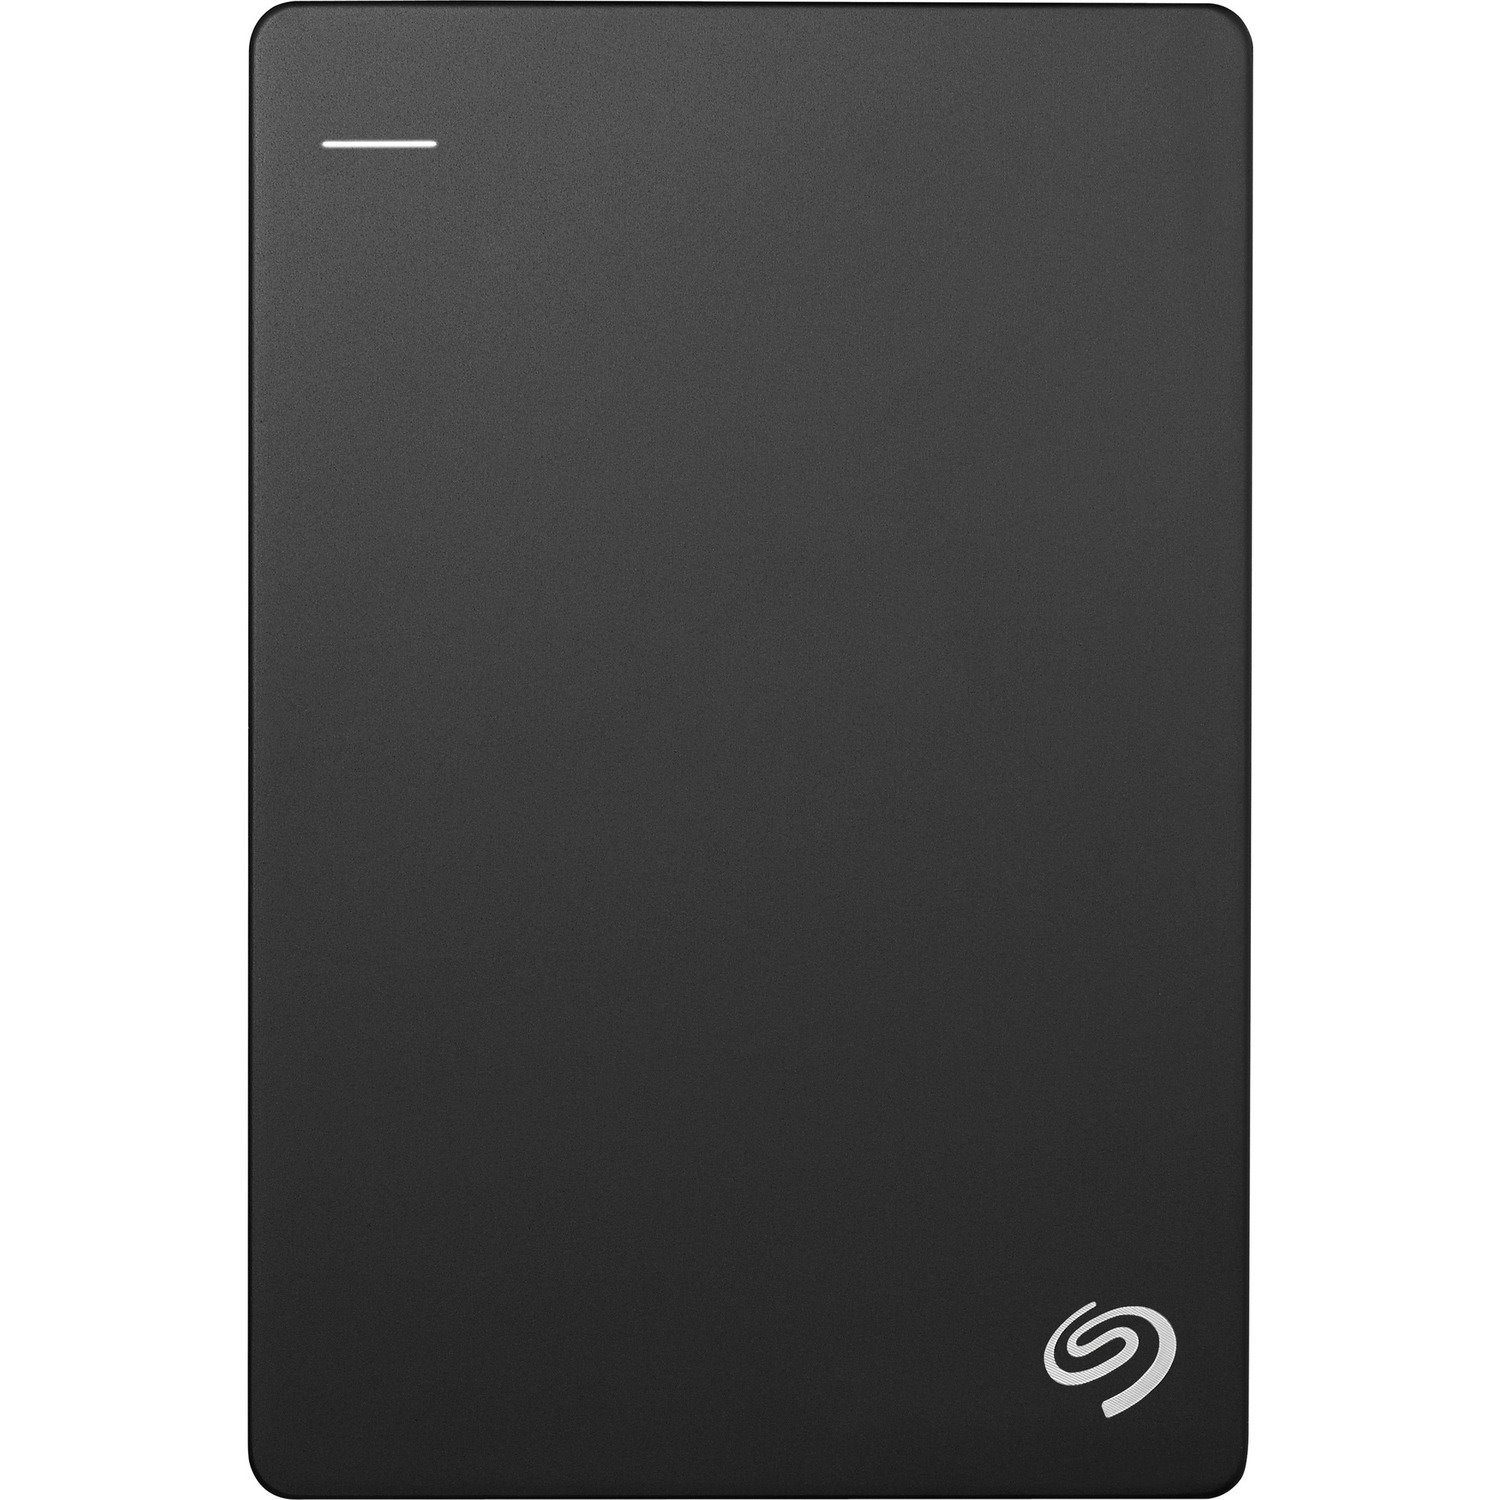 Seagate Backup Plus Slim STHN2000400 2 TB Portable Hard Drive - External - Black